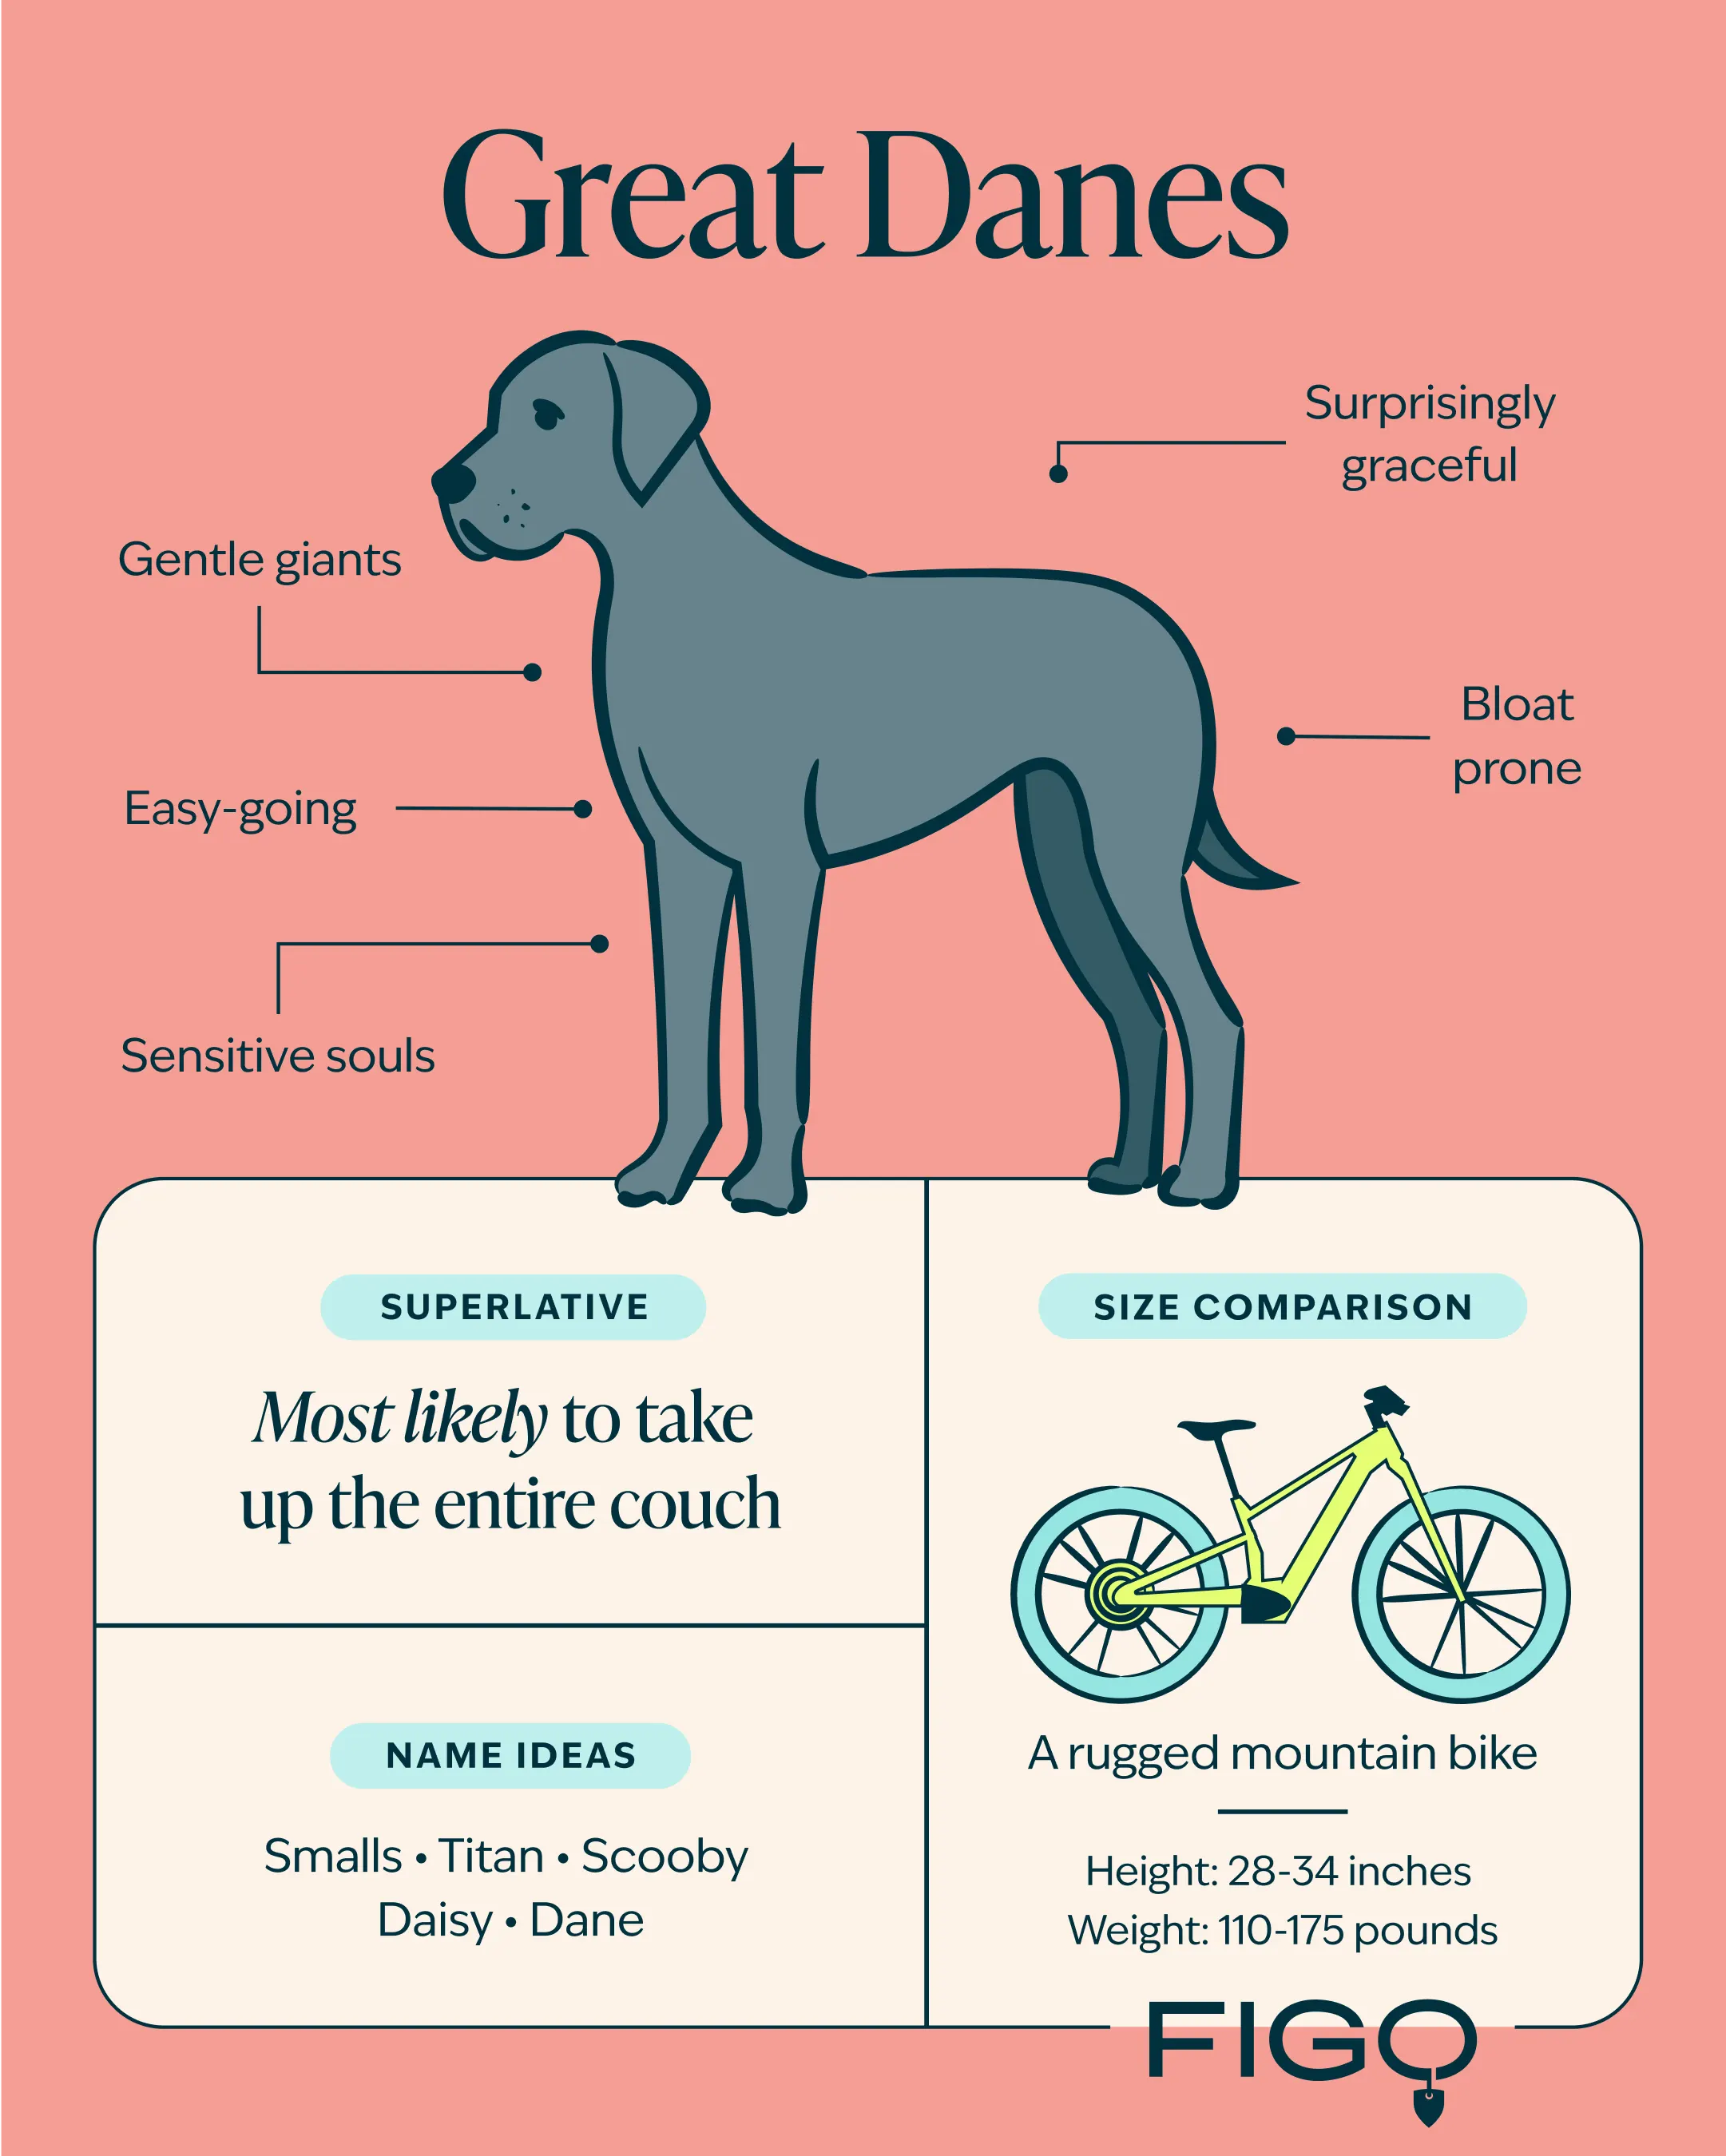 Great Dane breed guide illustration